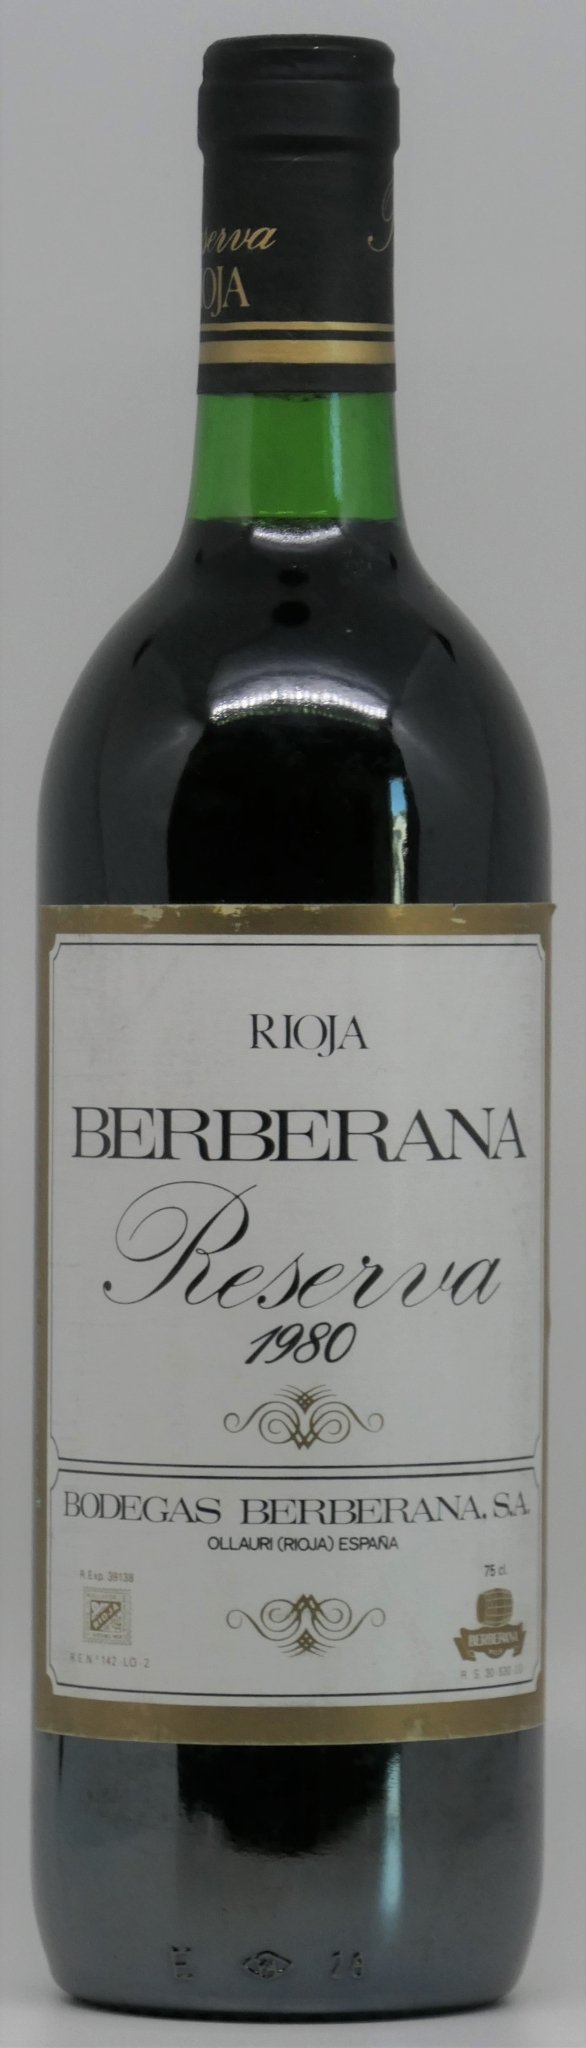 Berberana Reserva Rioja 1980 - The Spanish Table